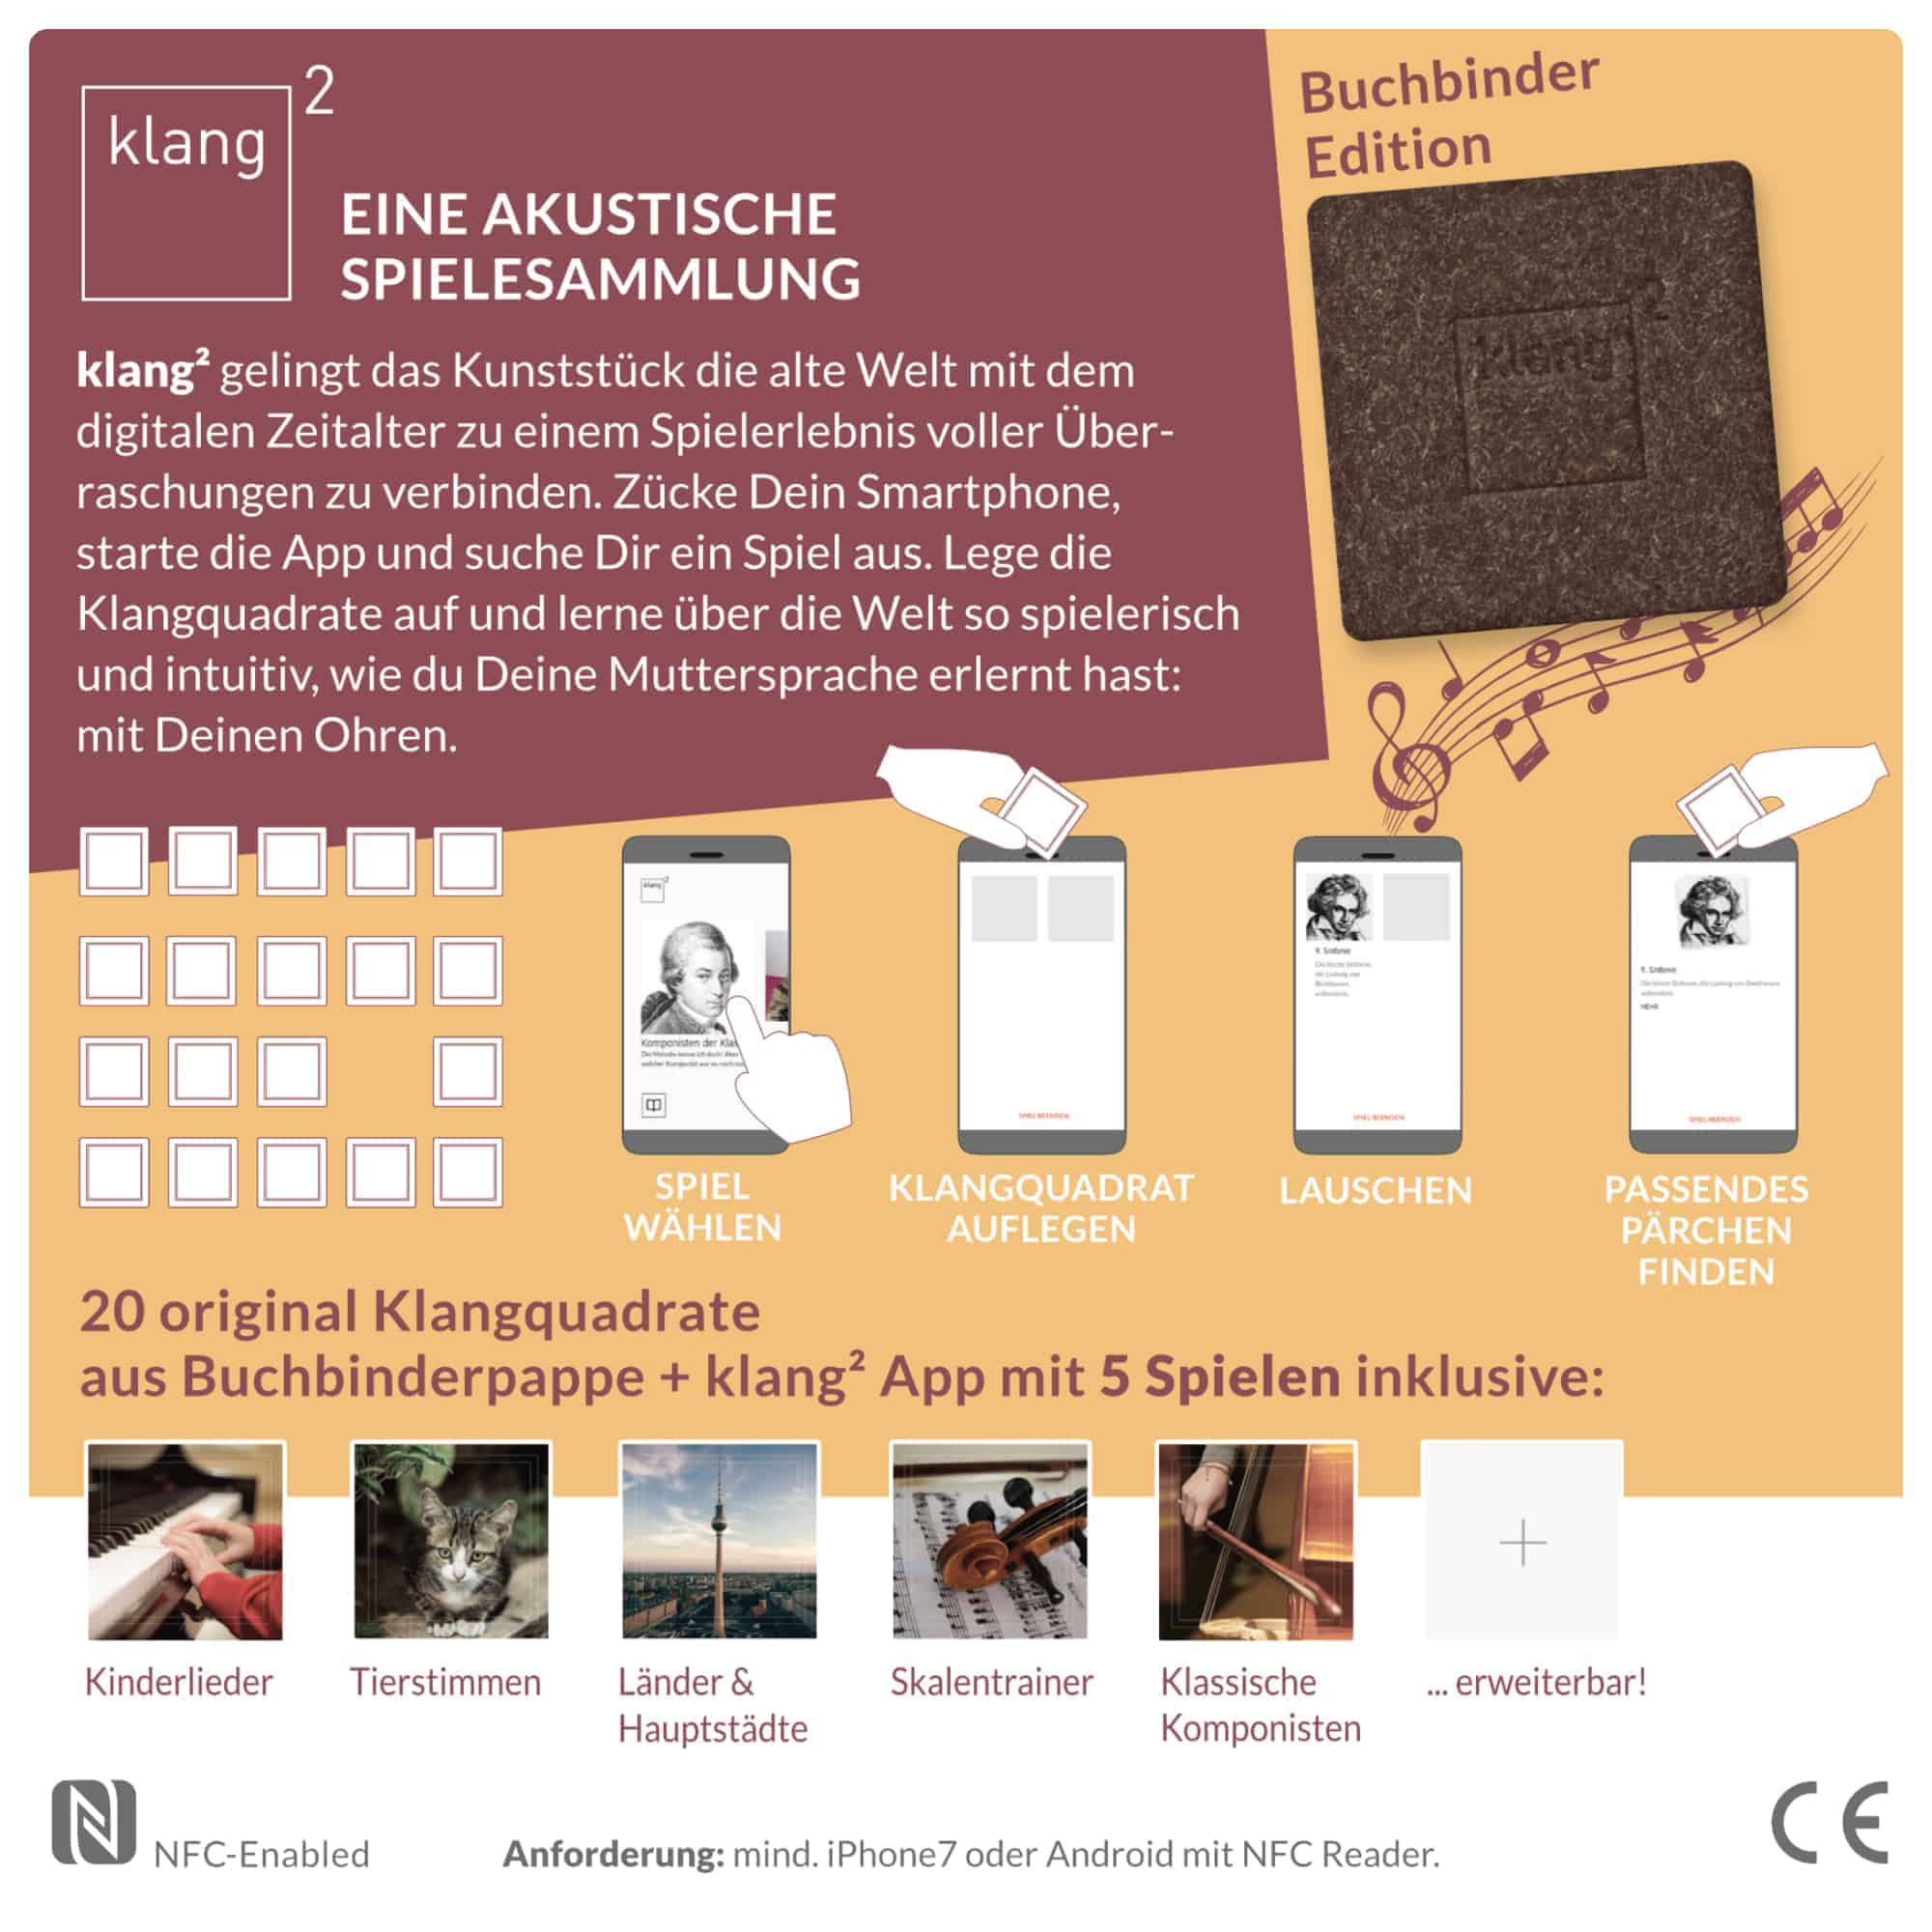 klang2 Buchbinder Edition 02